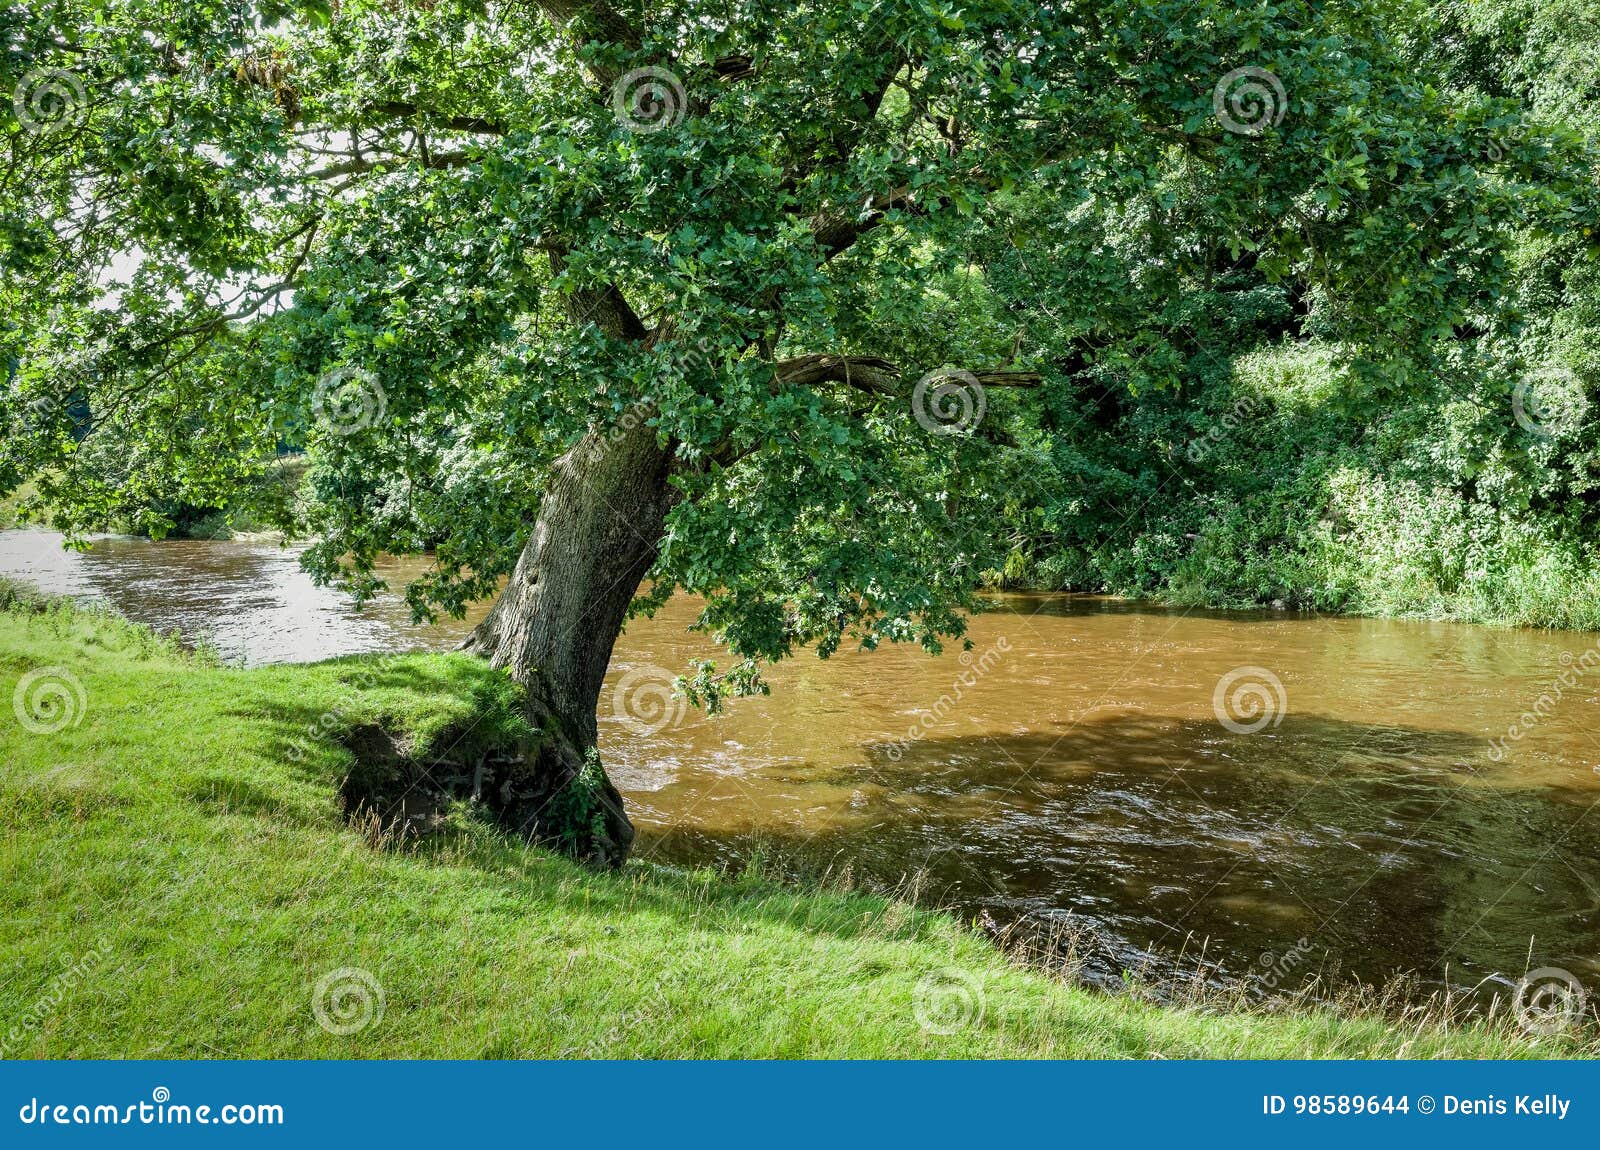 river calder in lancashire, england